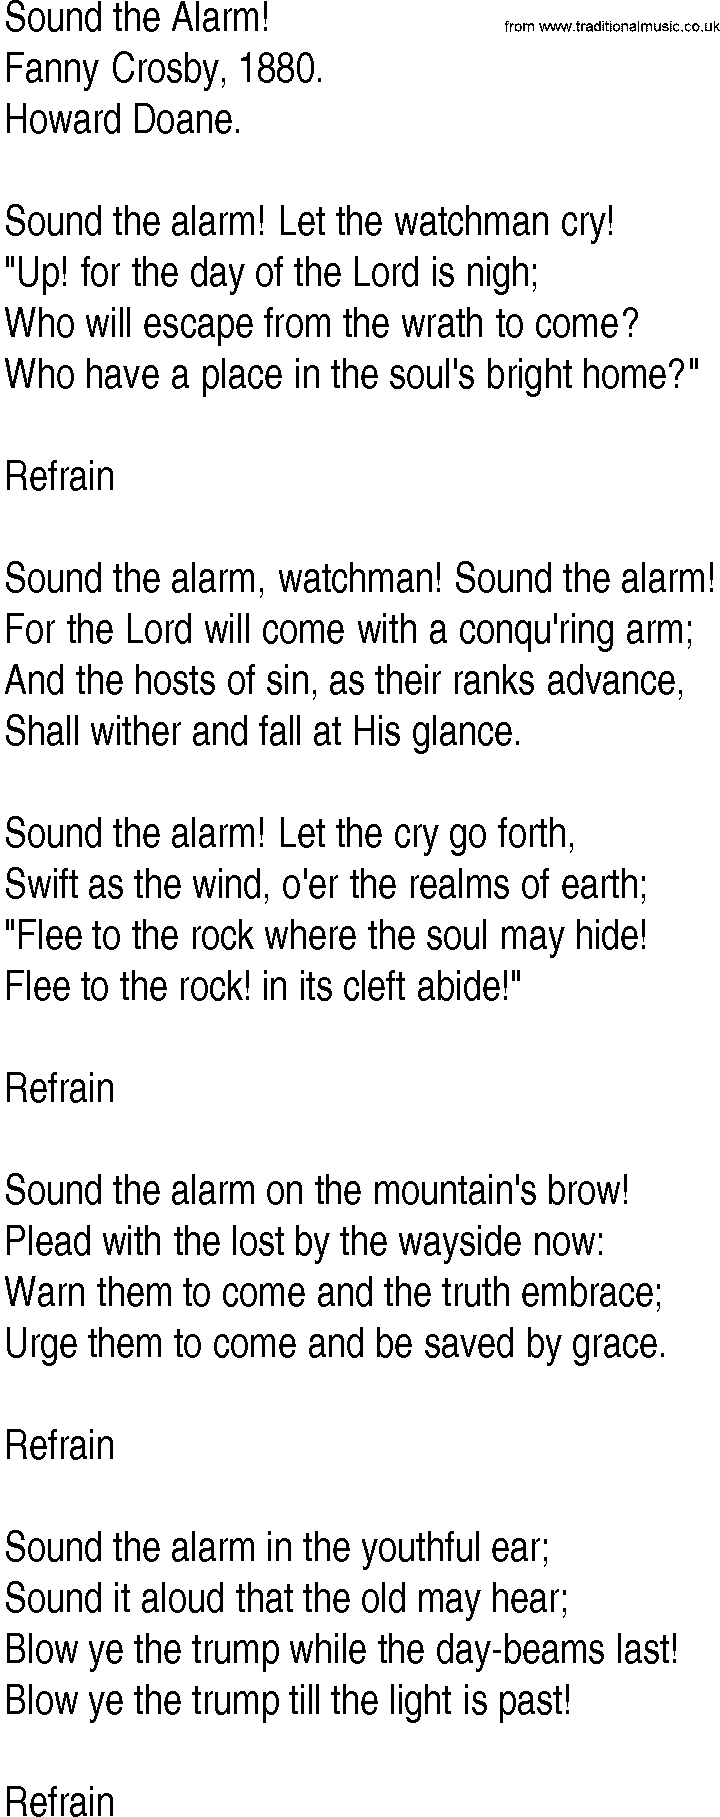 Hymn and Gospel Song: Sound the Alarm! by Fanny Crosby lyrics